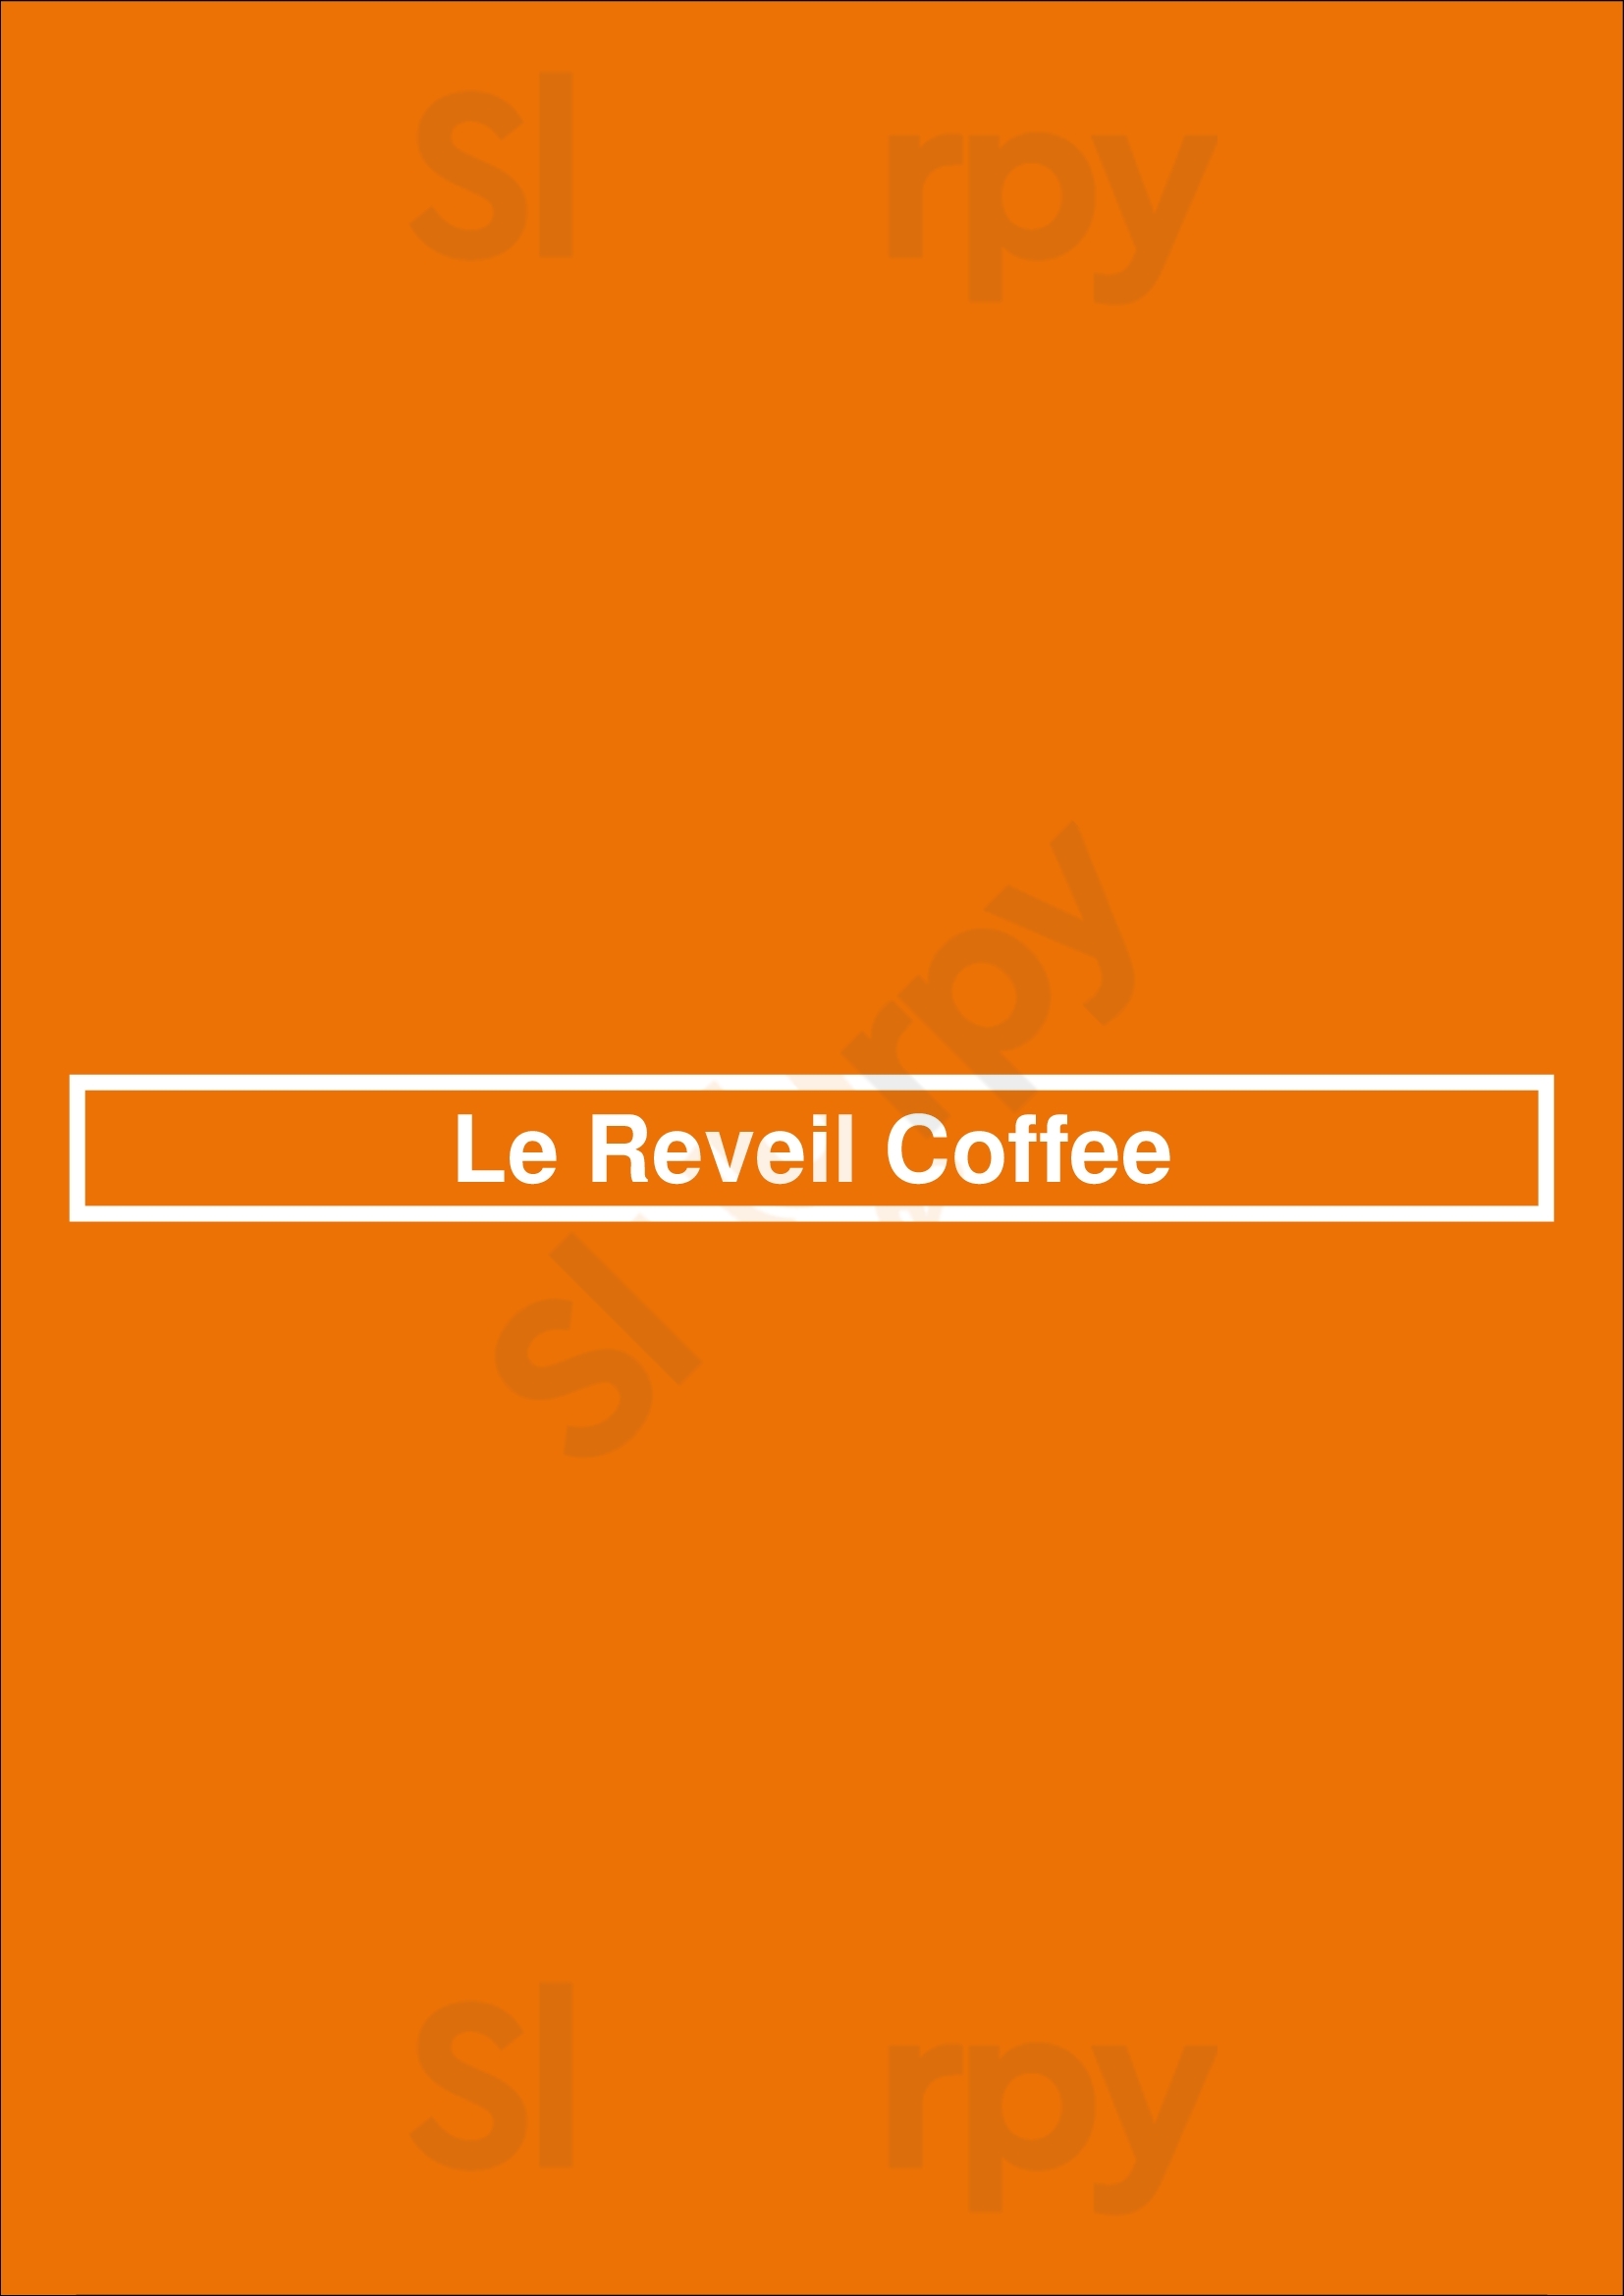 Le Reveil Coffee New York City Menu - 1